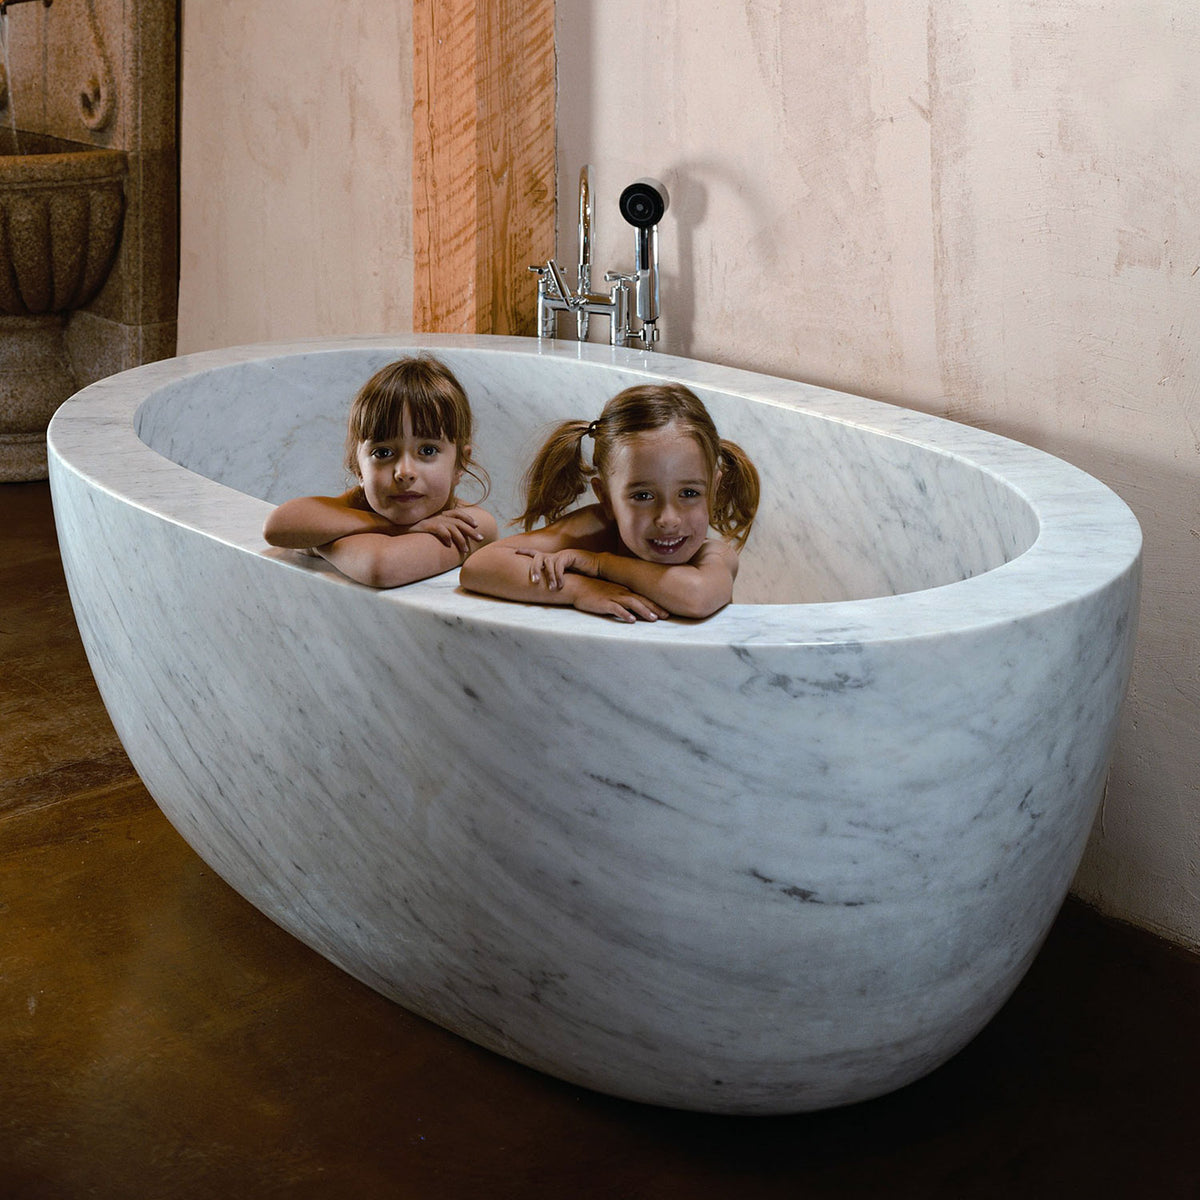 Oval Bathtub image 4 of 4